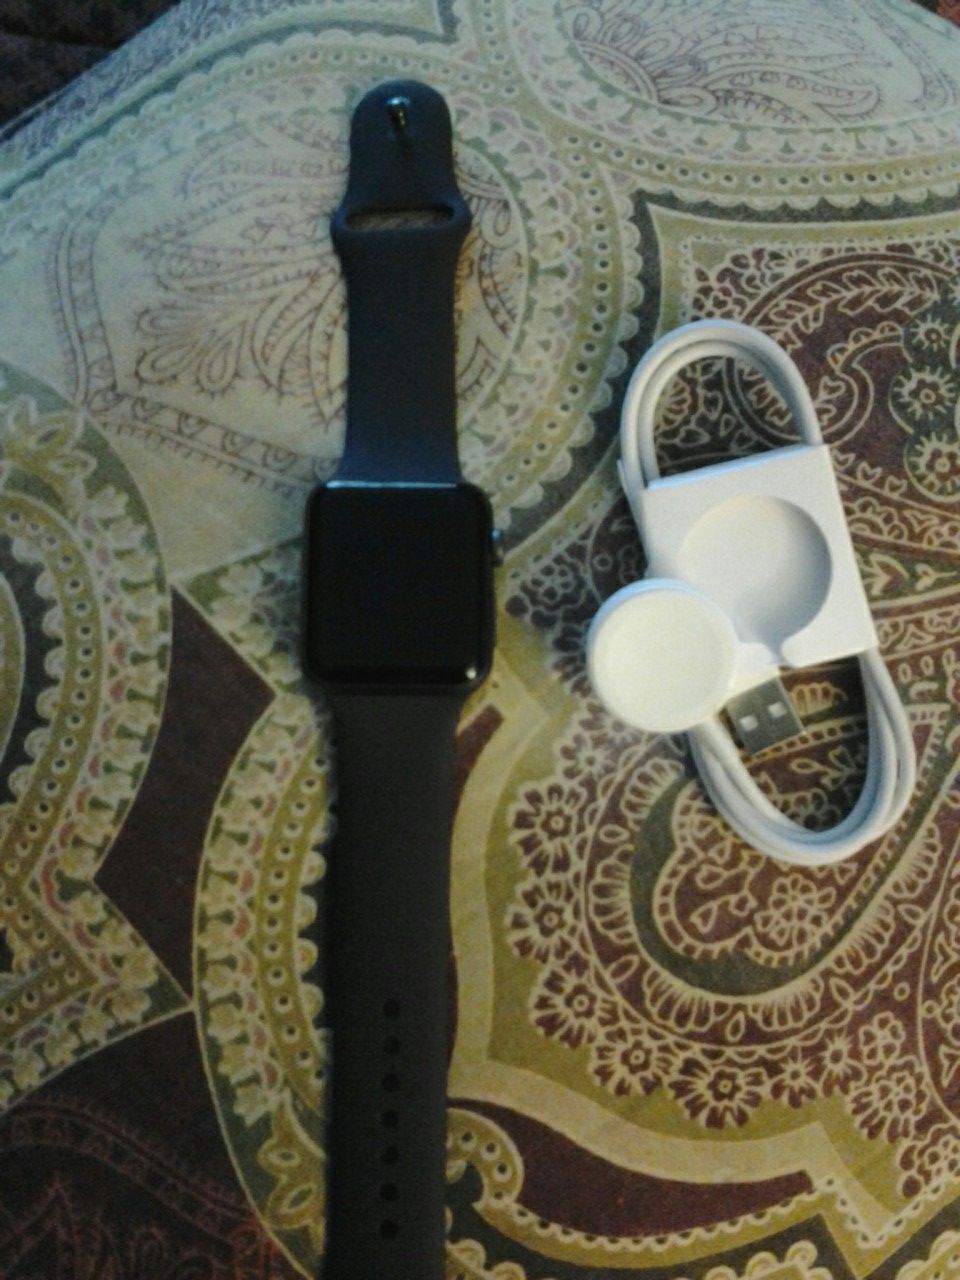 Apple Watch series 3 42mm